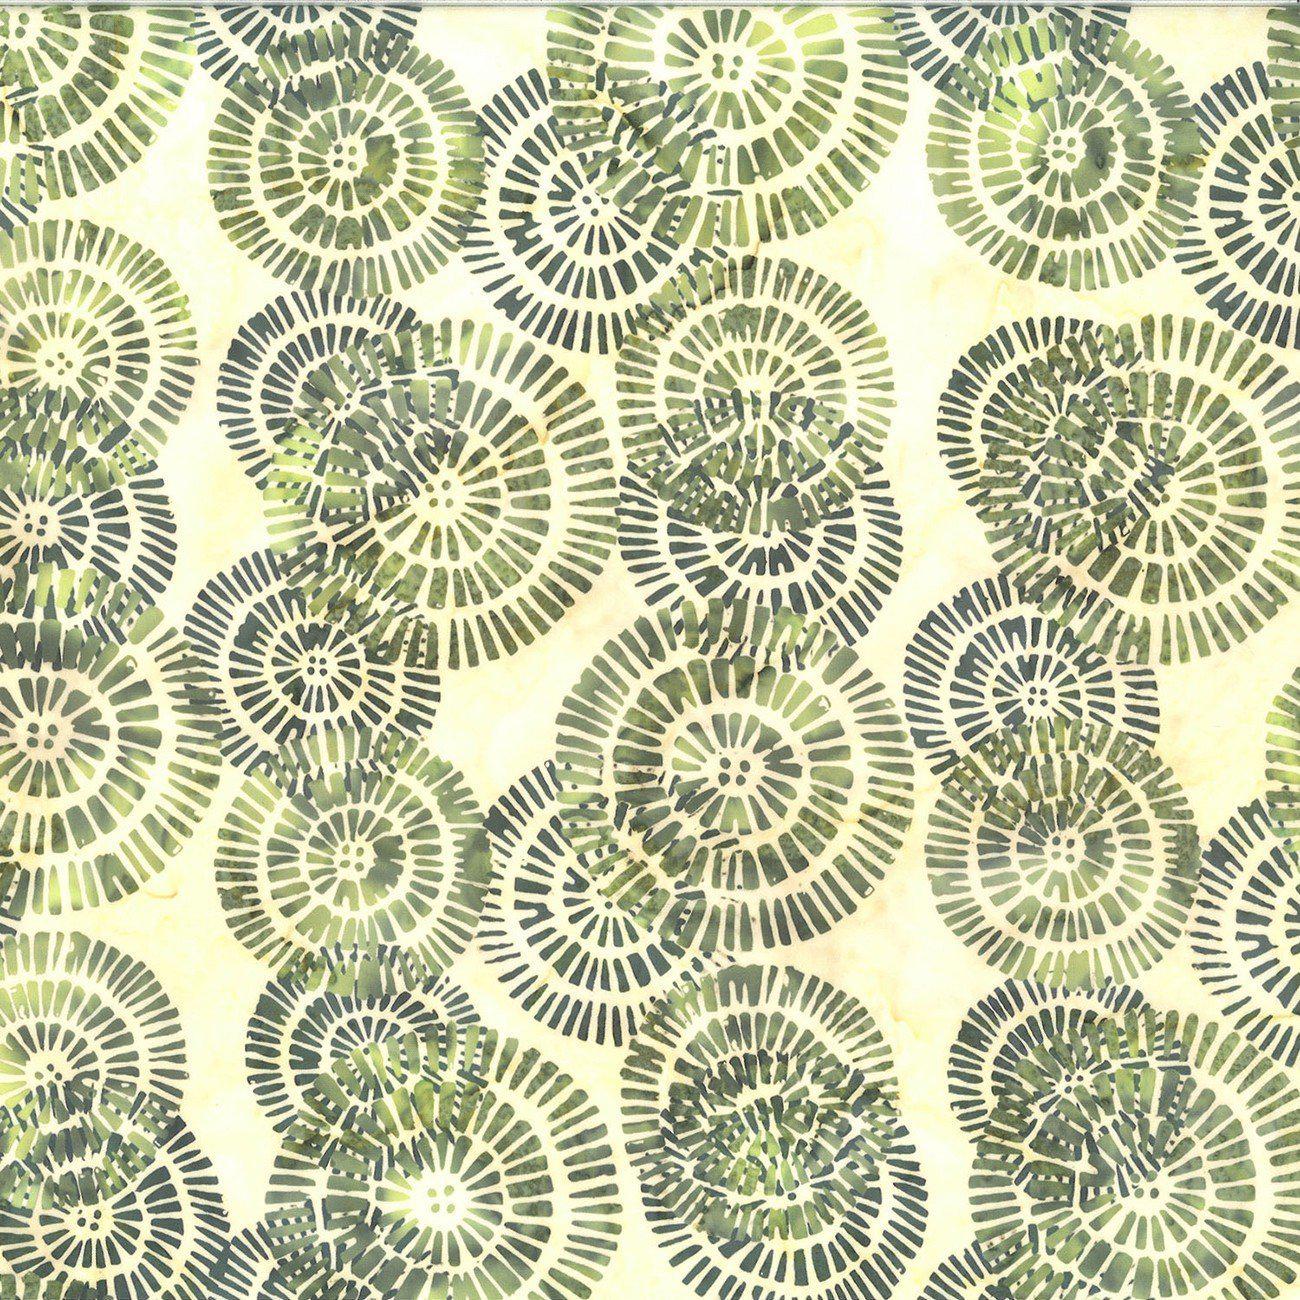 Burst Caterpillar Bali Batik Fabric-Hoffman Fabrics-My Favorite Quilt Store